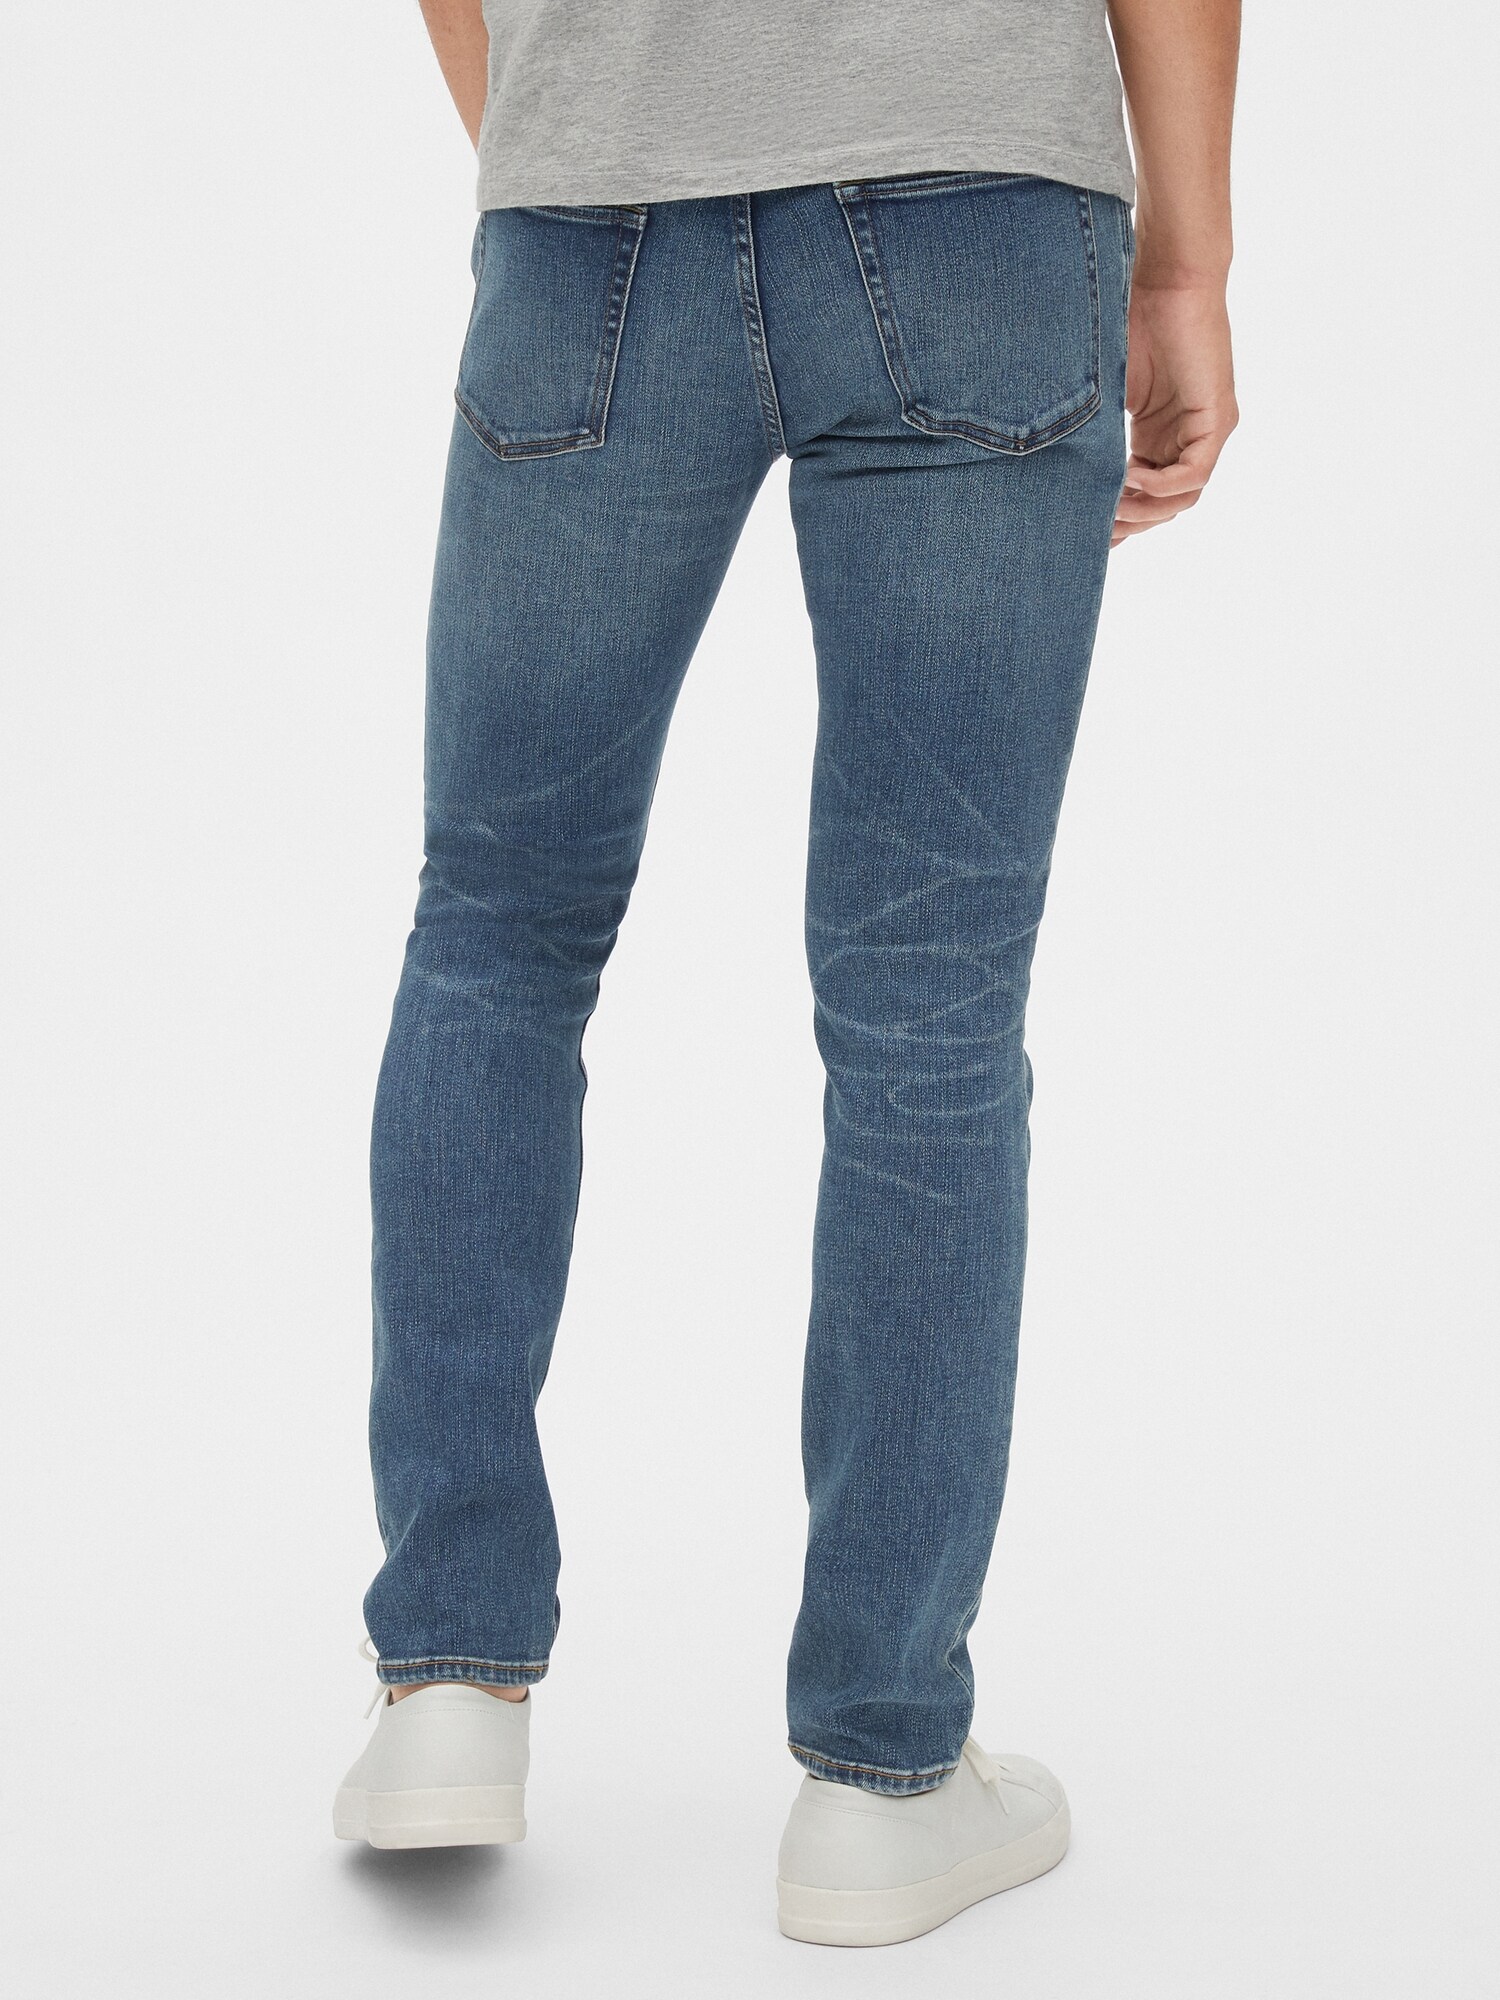 Gap Flex Soft Wear Skinny Jean Pantolon. 2